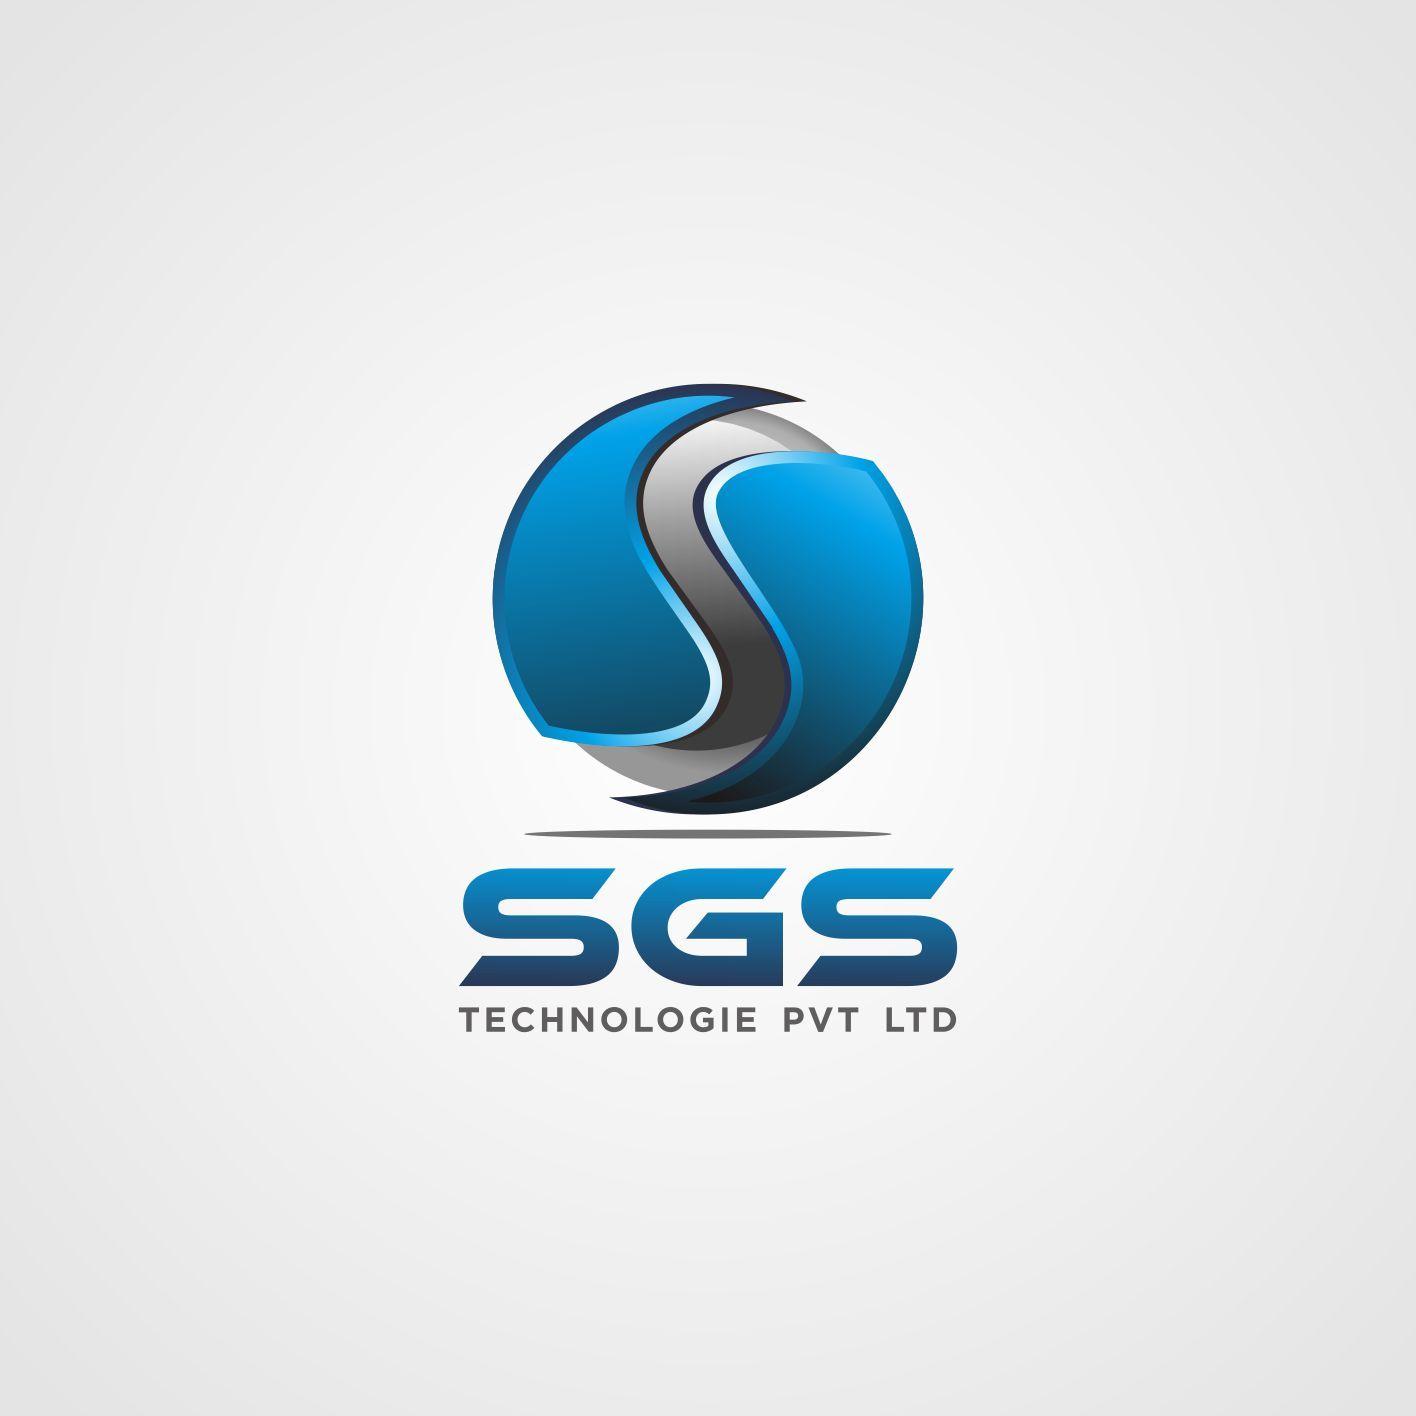 SGS Logo - Elegant, Playful, Information Technology Logo Design for SGS ...